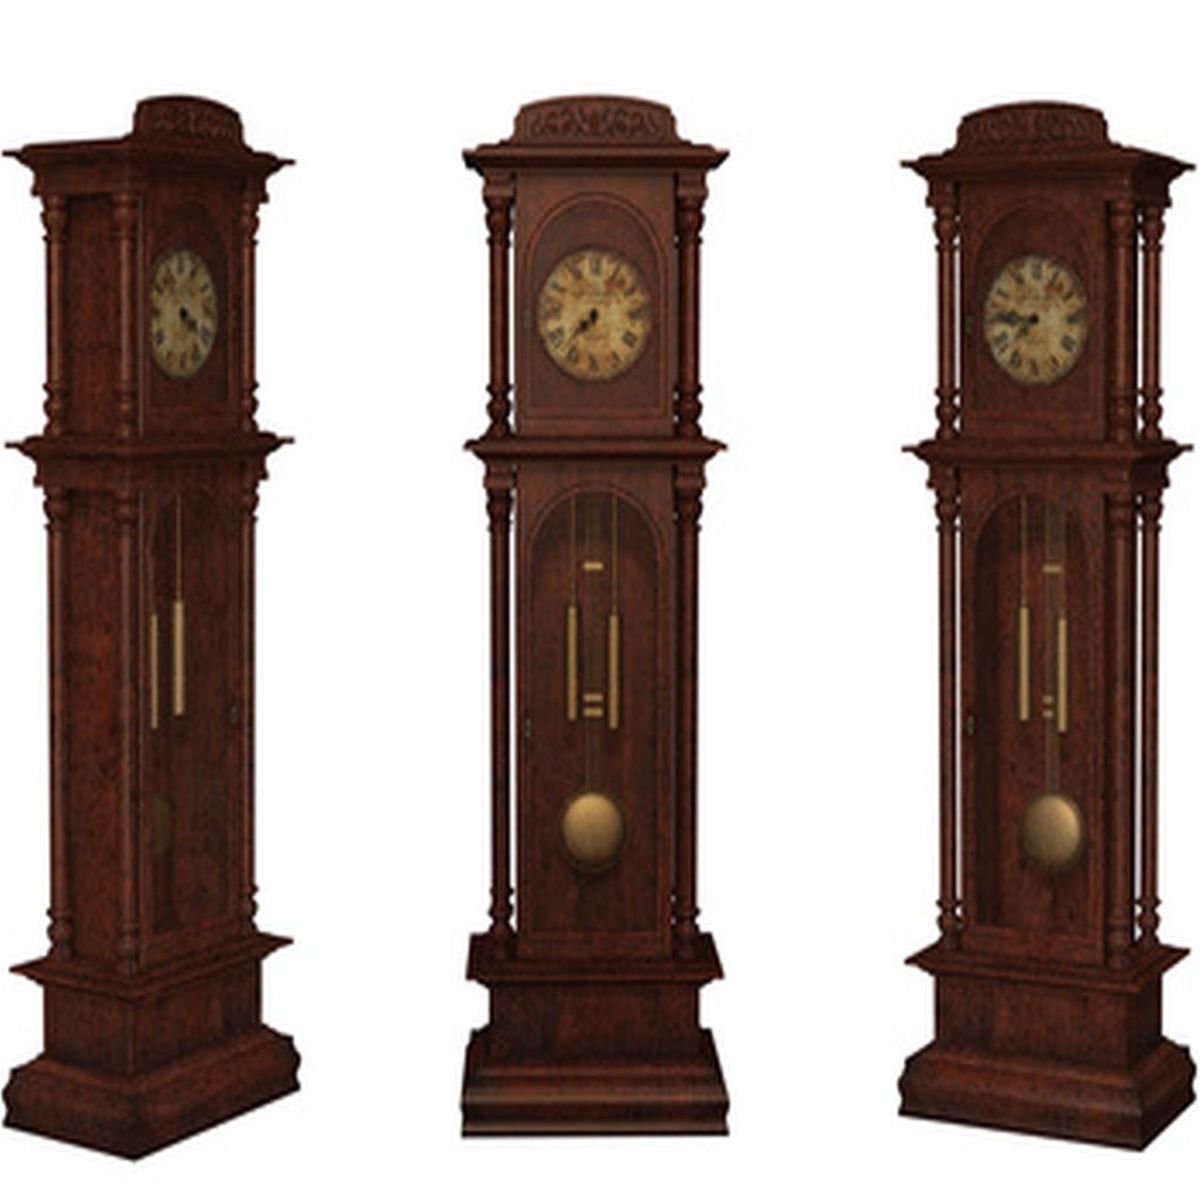 Ridgeway Grandfather Clocks - Watch and Clock Repair